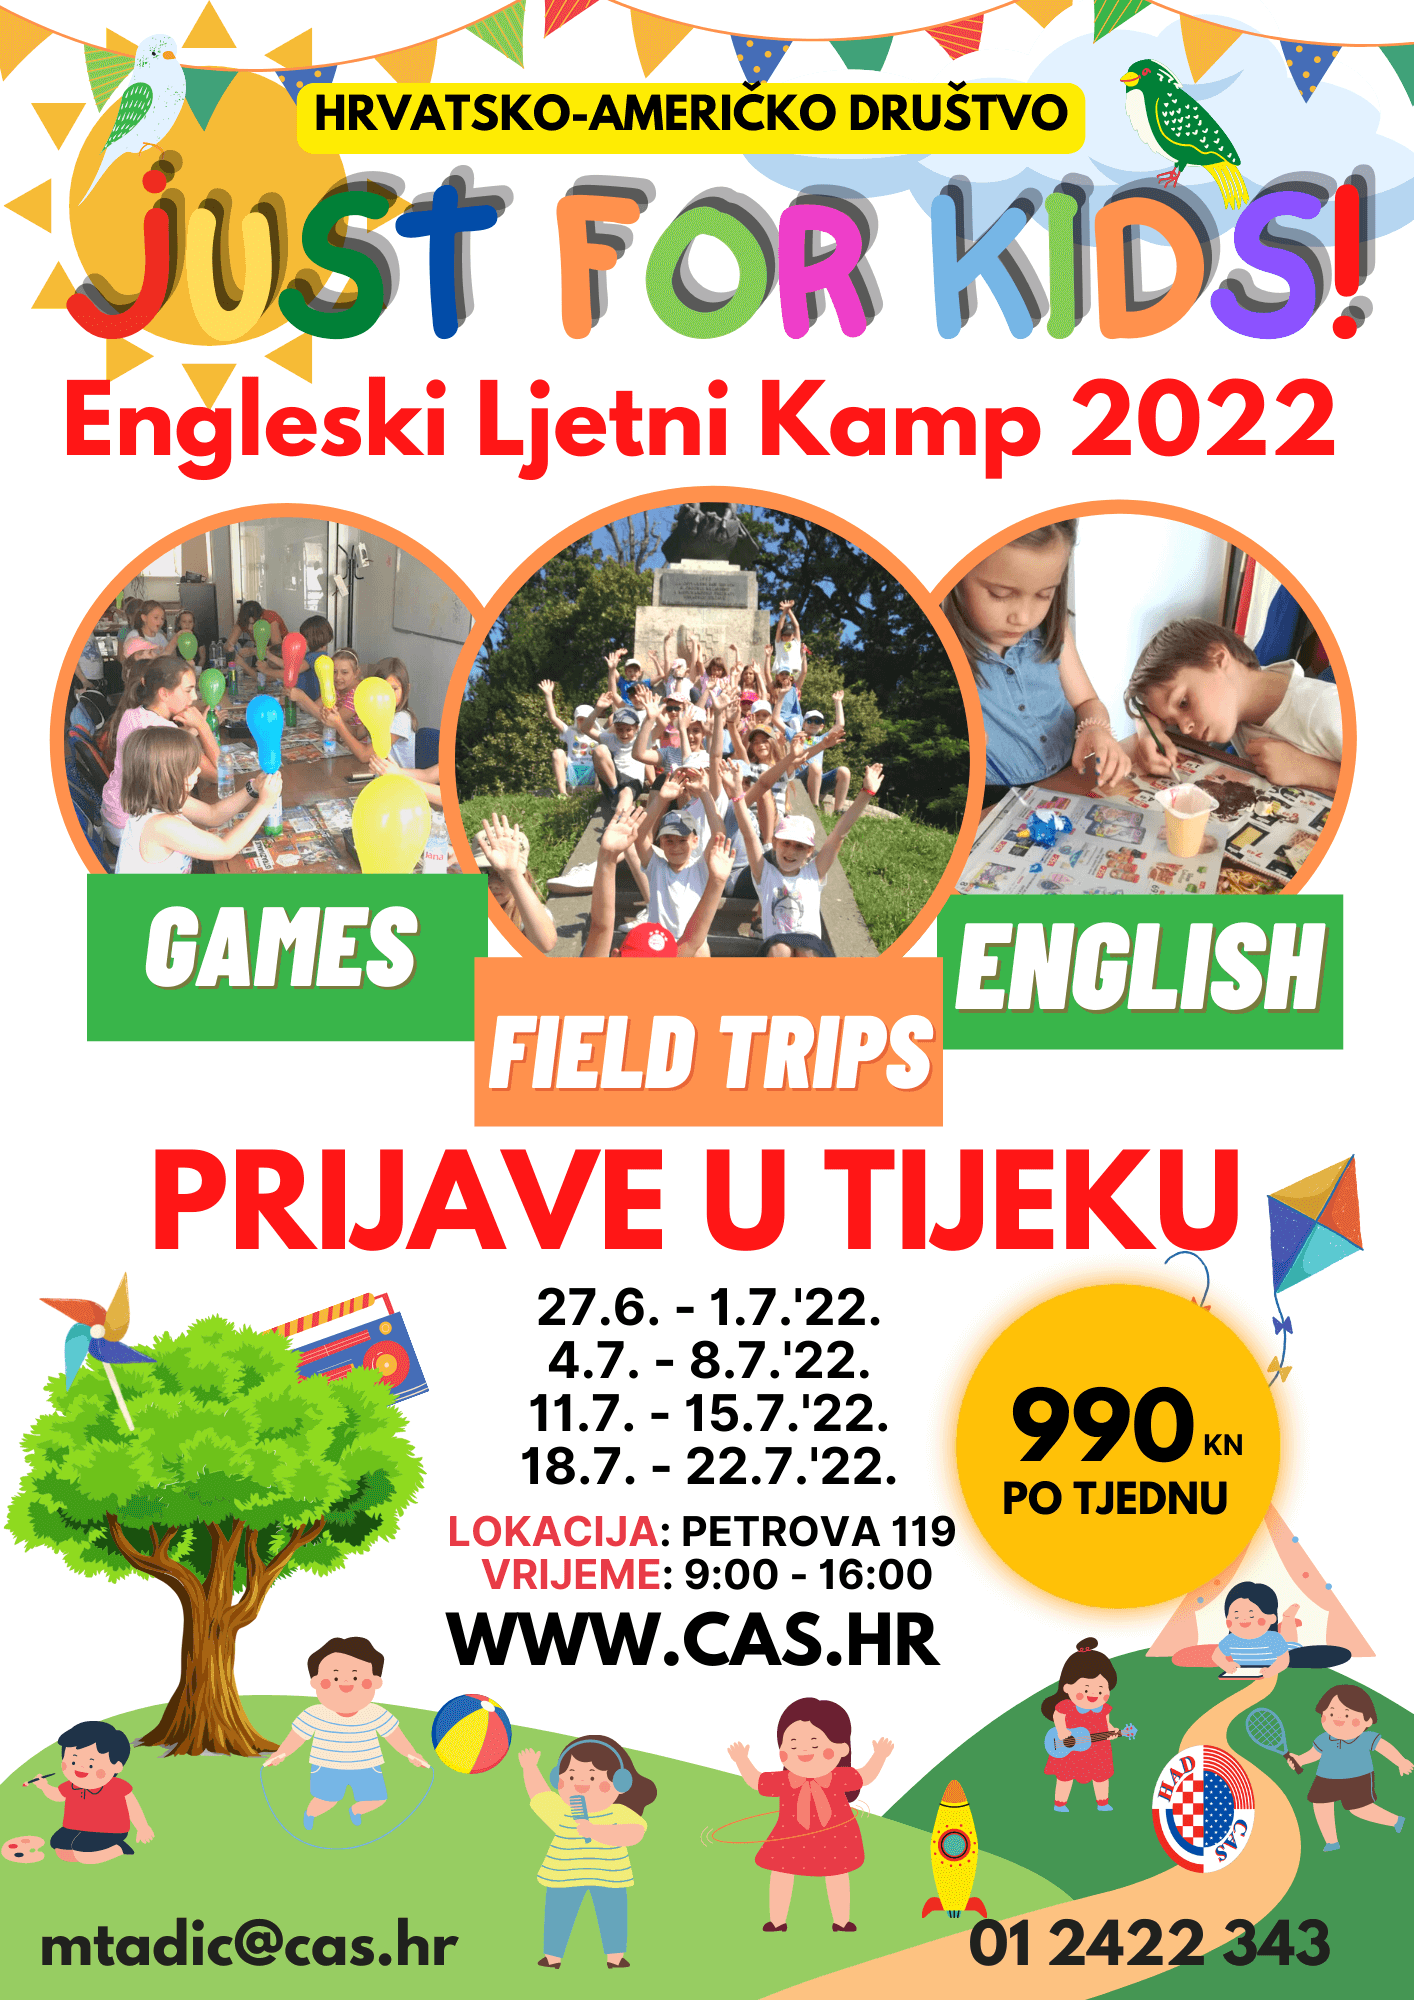 Engleski Ljetni Kamp u Zagrebu